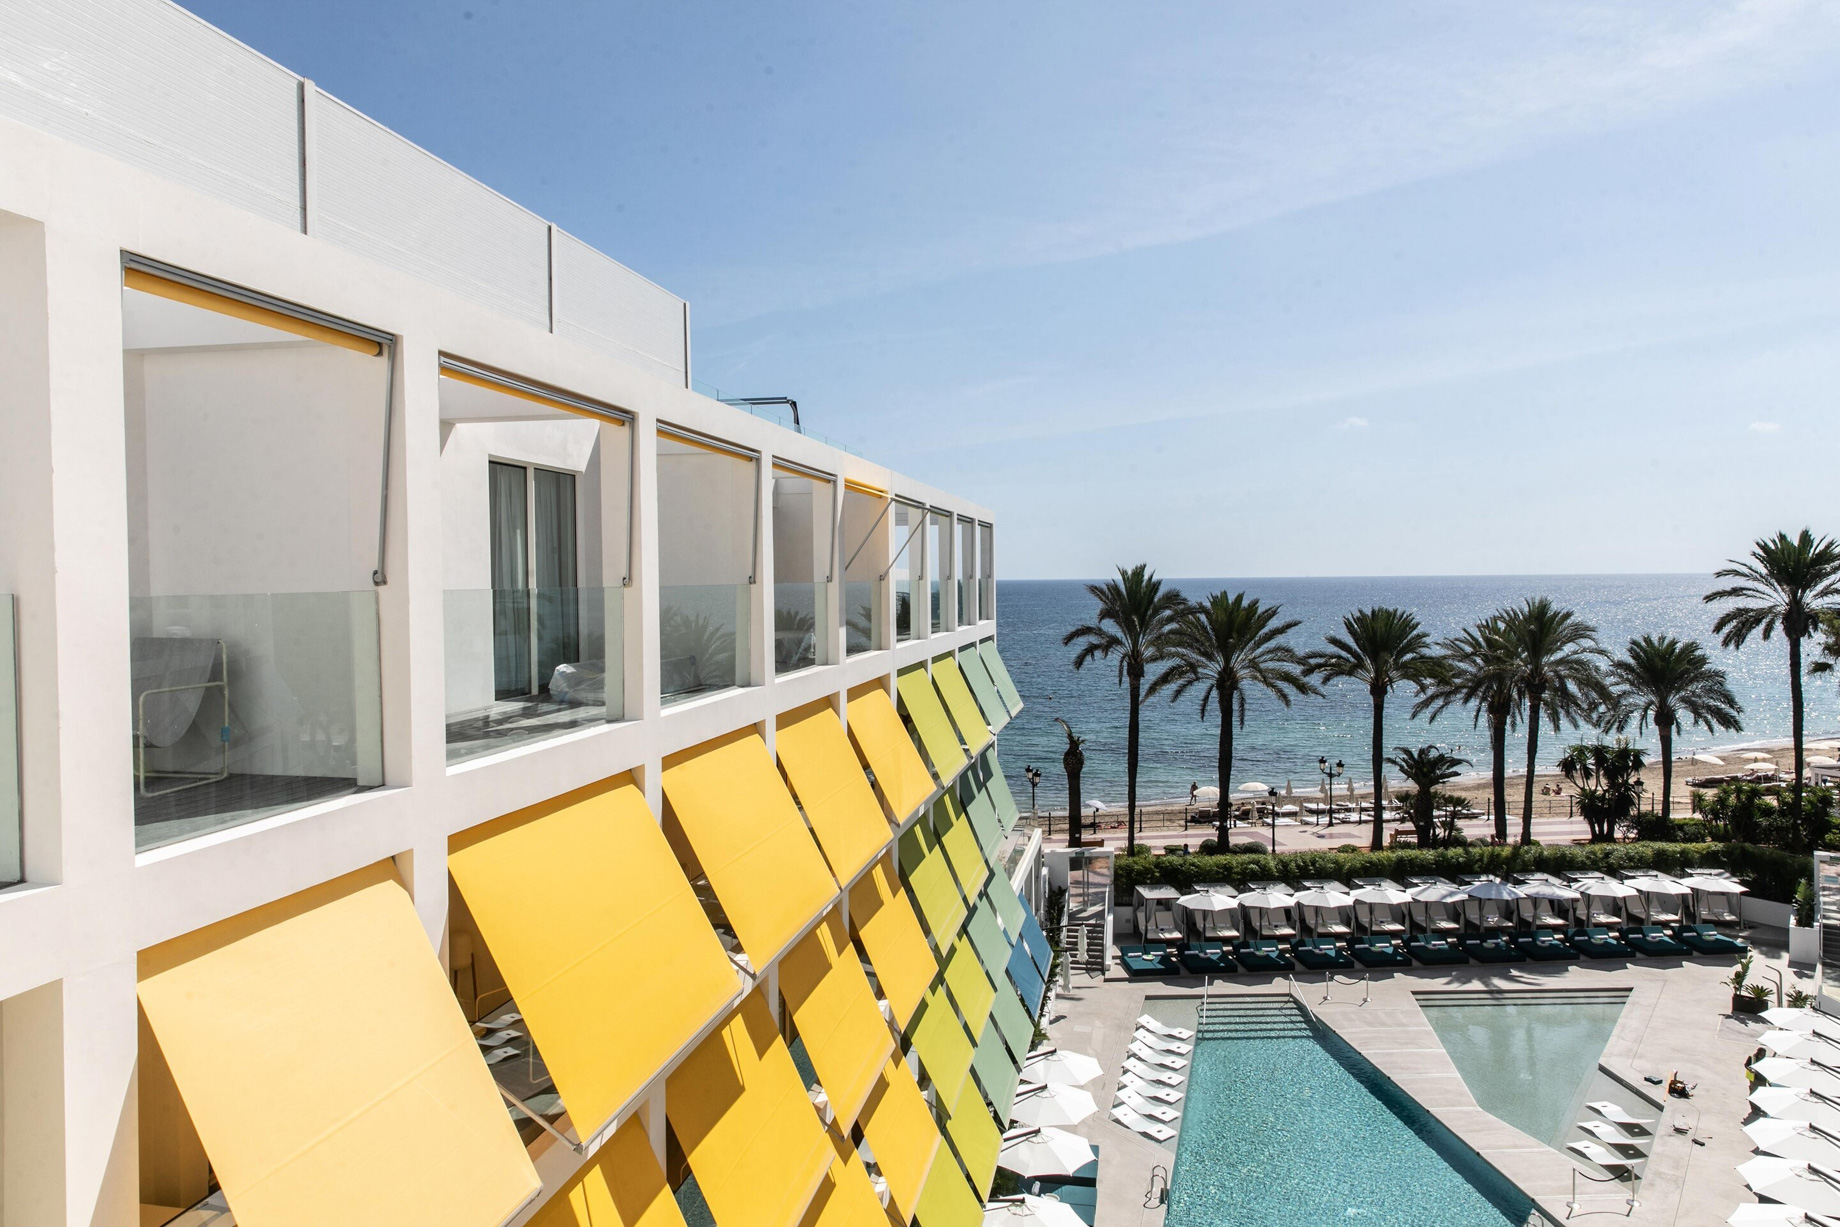 W Ibiza Hotel – Santa Eulalia del Rio, Spain – Wet Deck